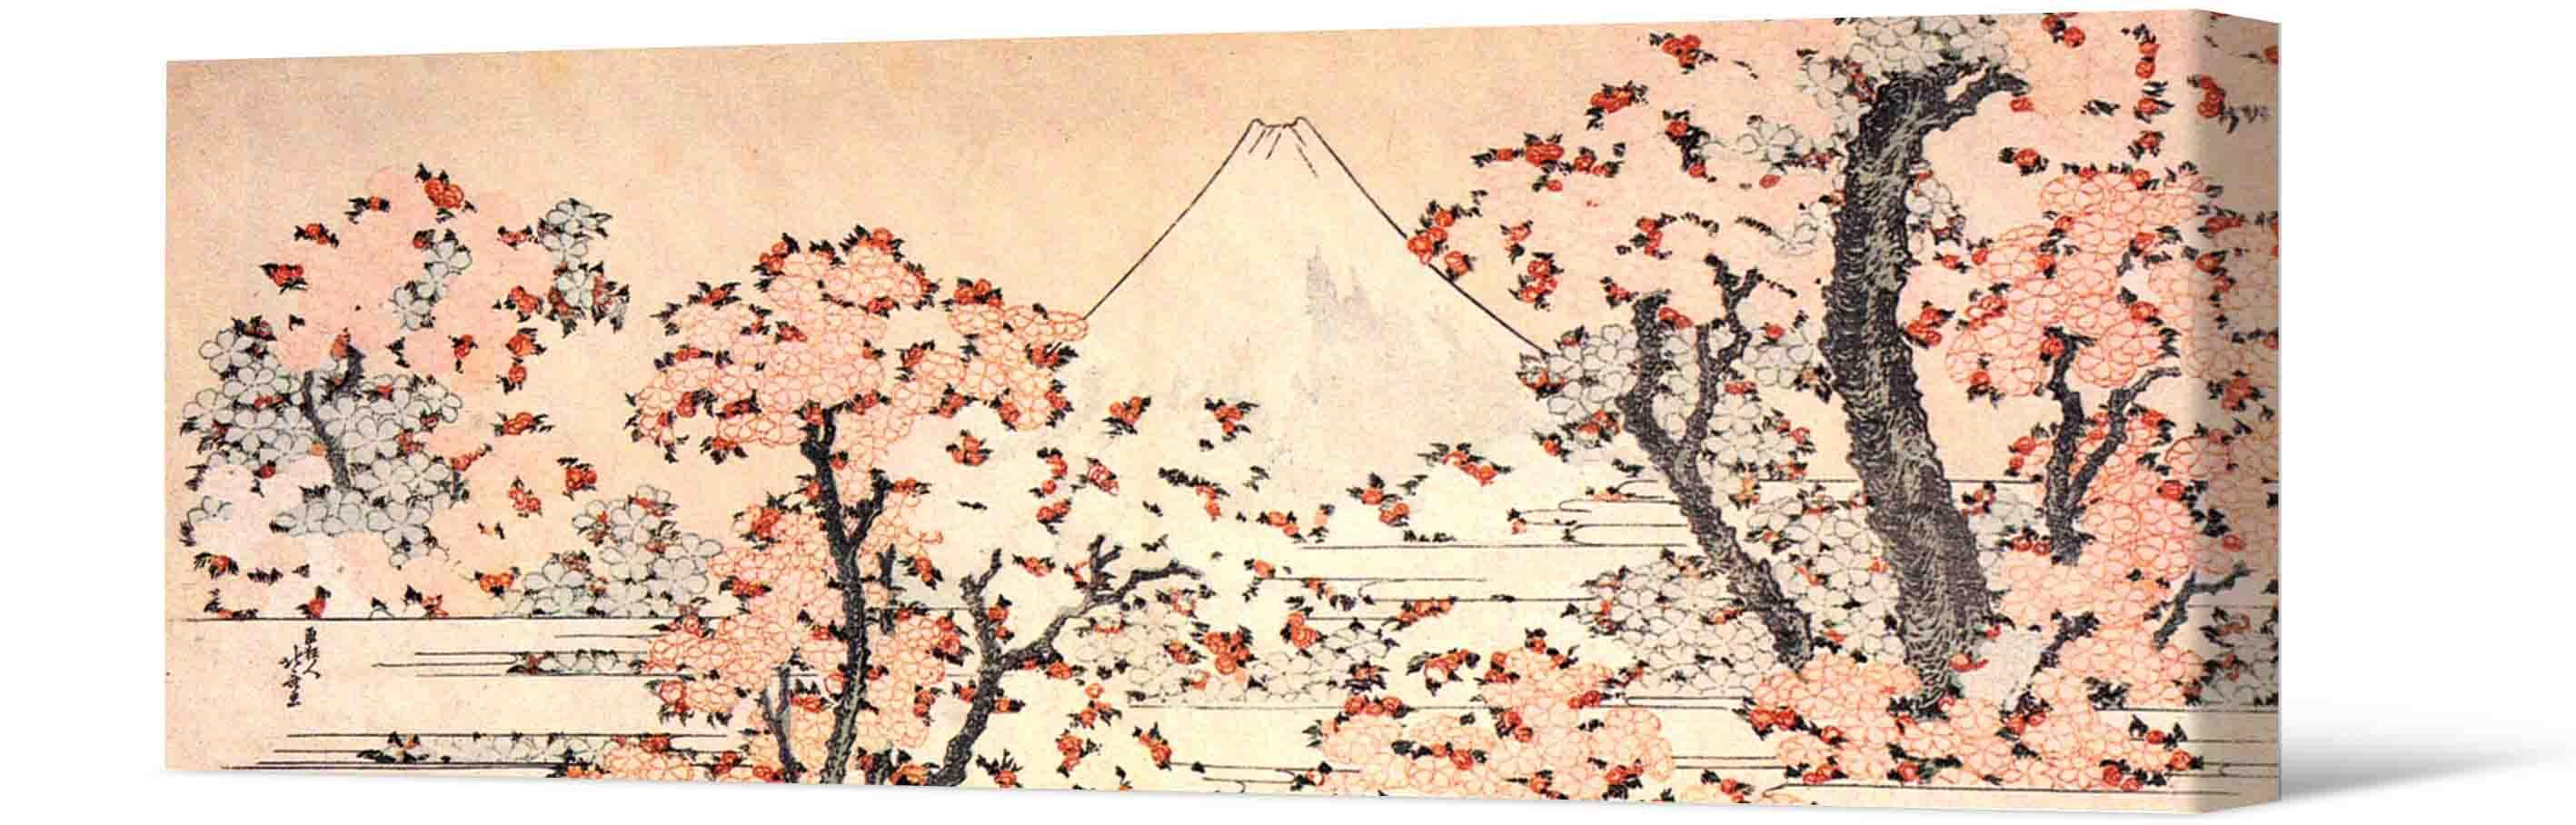 Photo picture - sakura trees and volcano